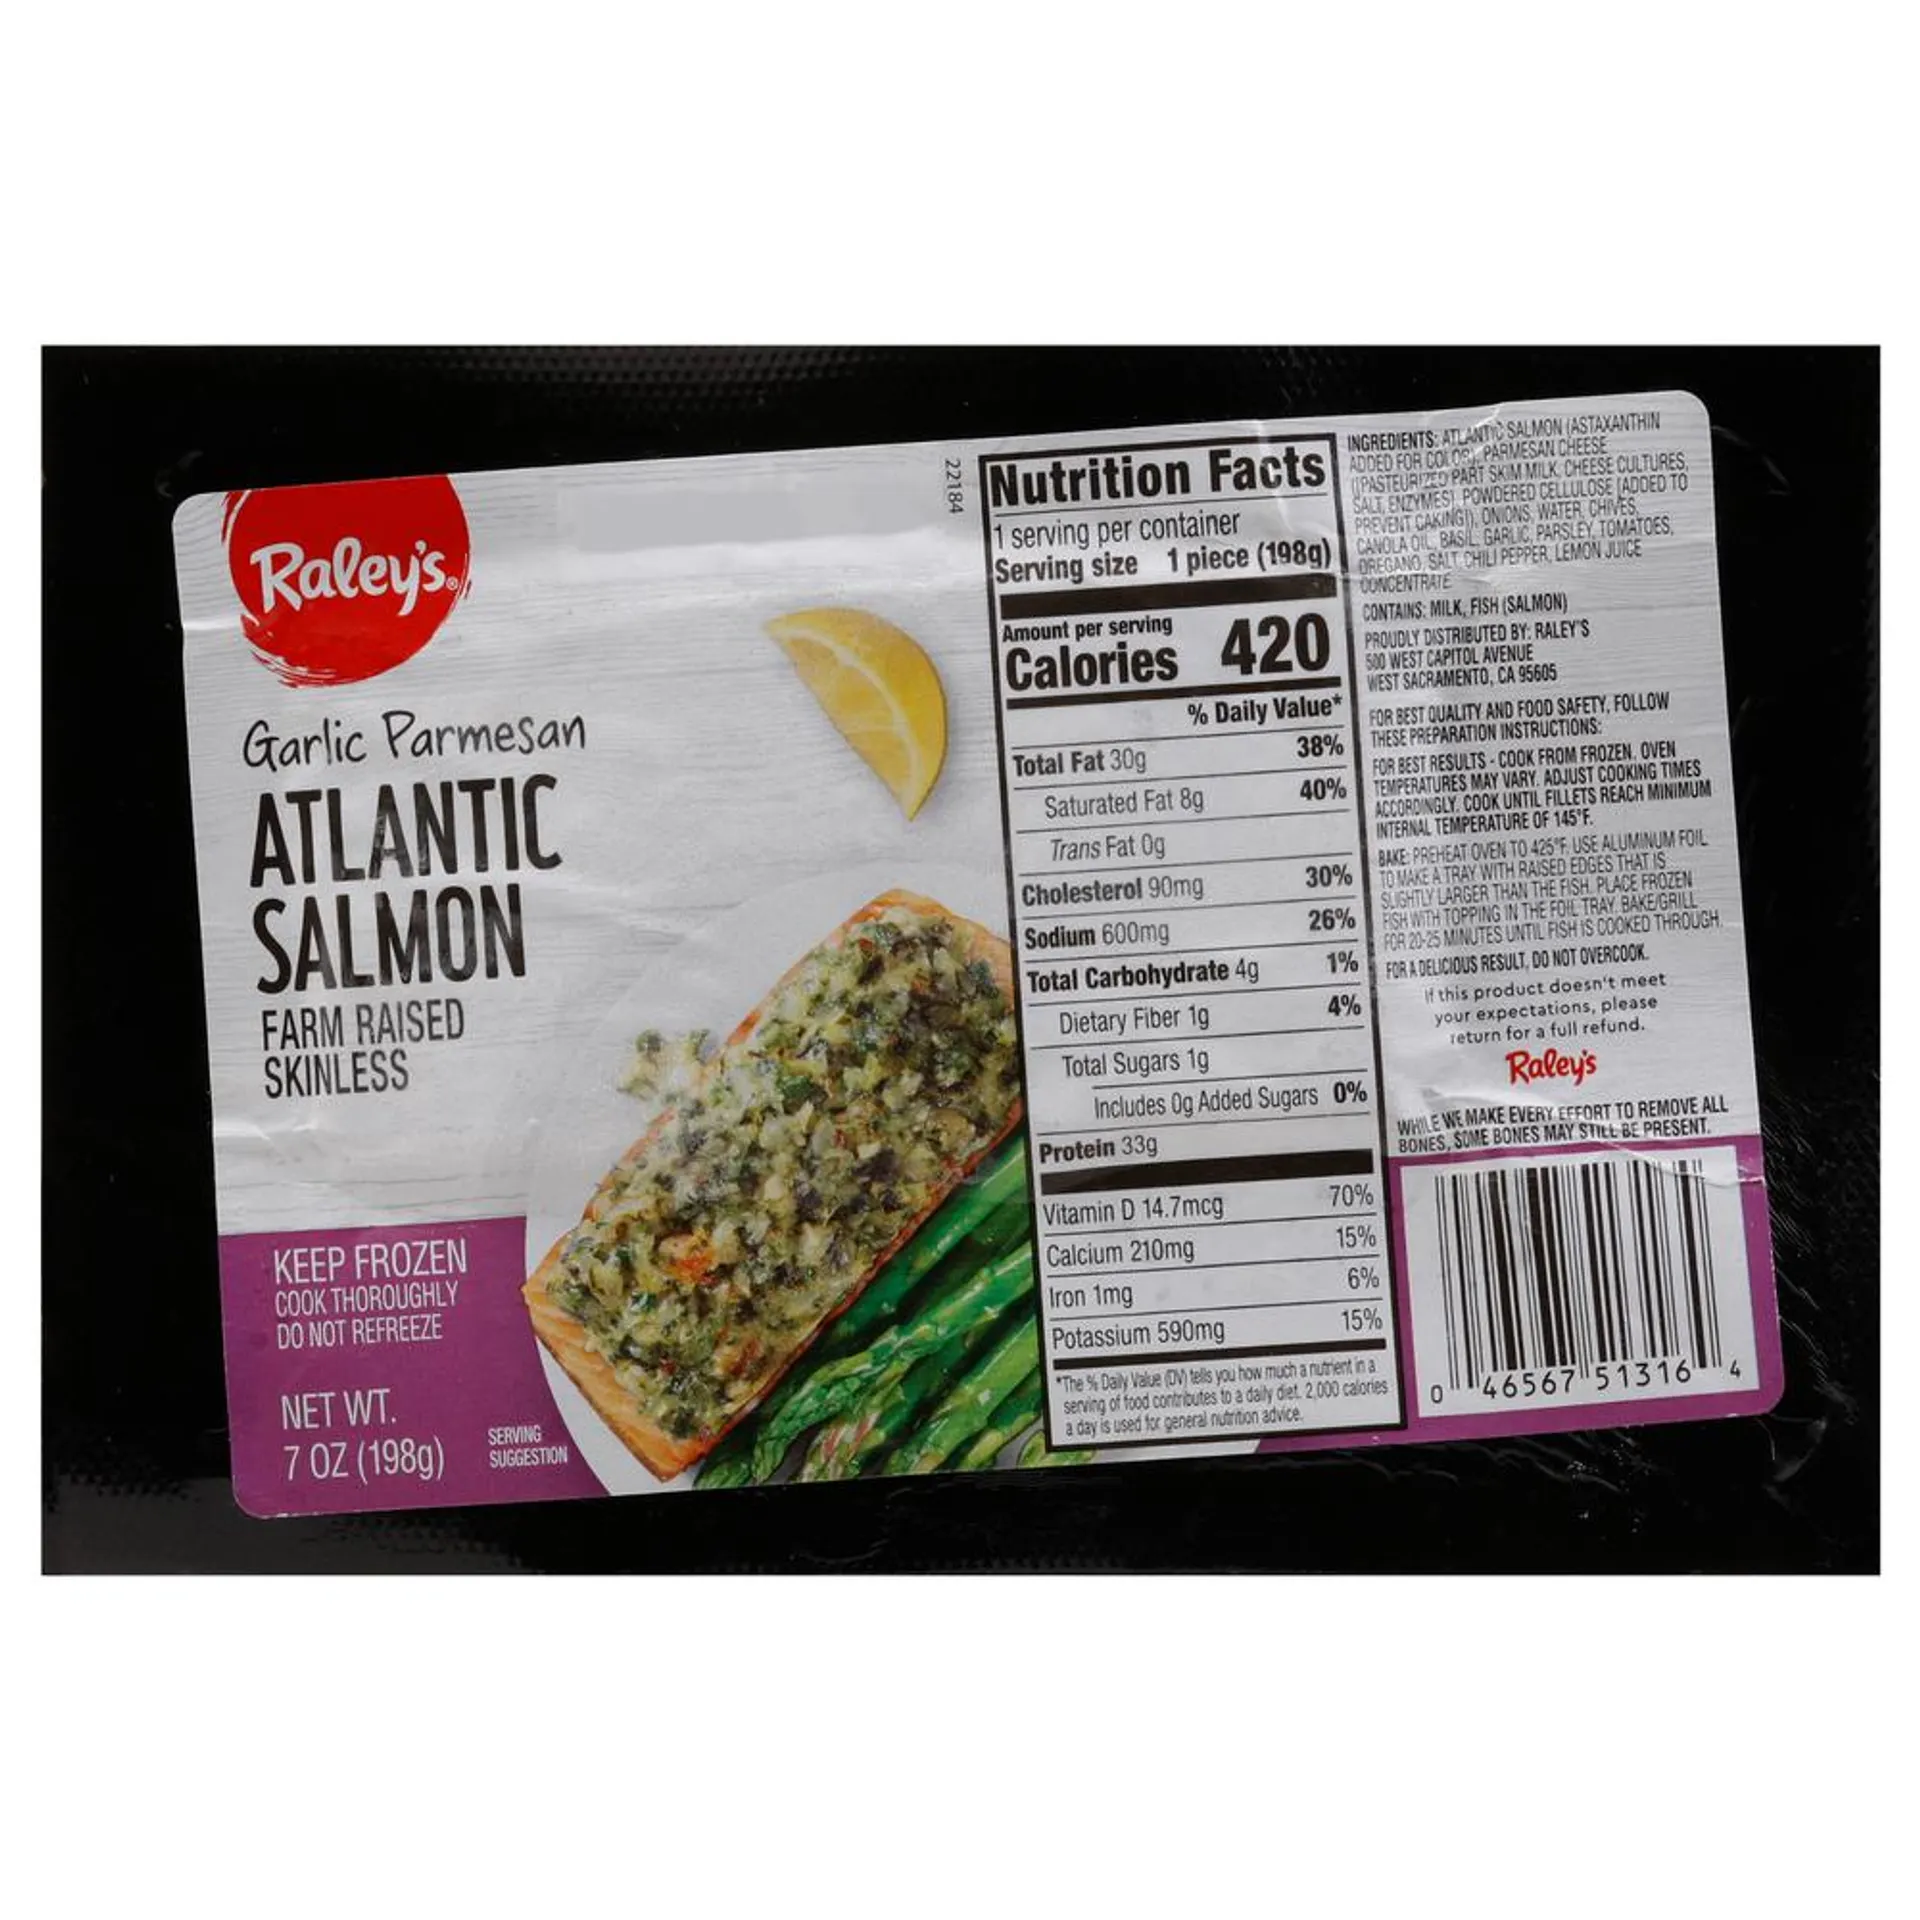 Raley's Skinless Garlic Parmesan Atlantic Salmon